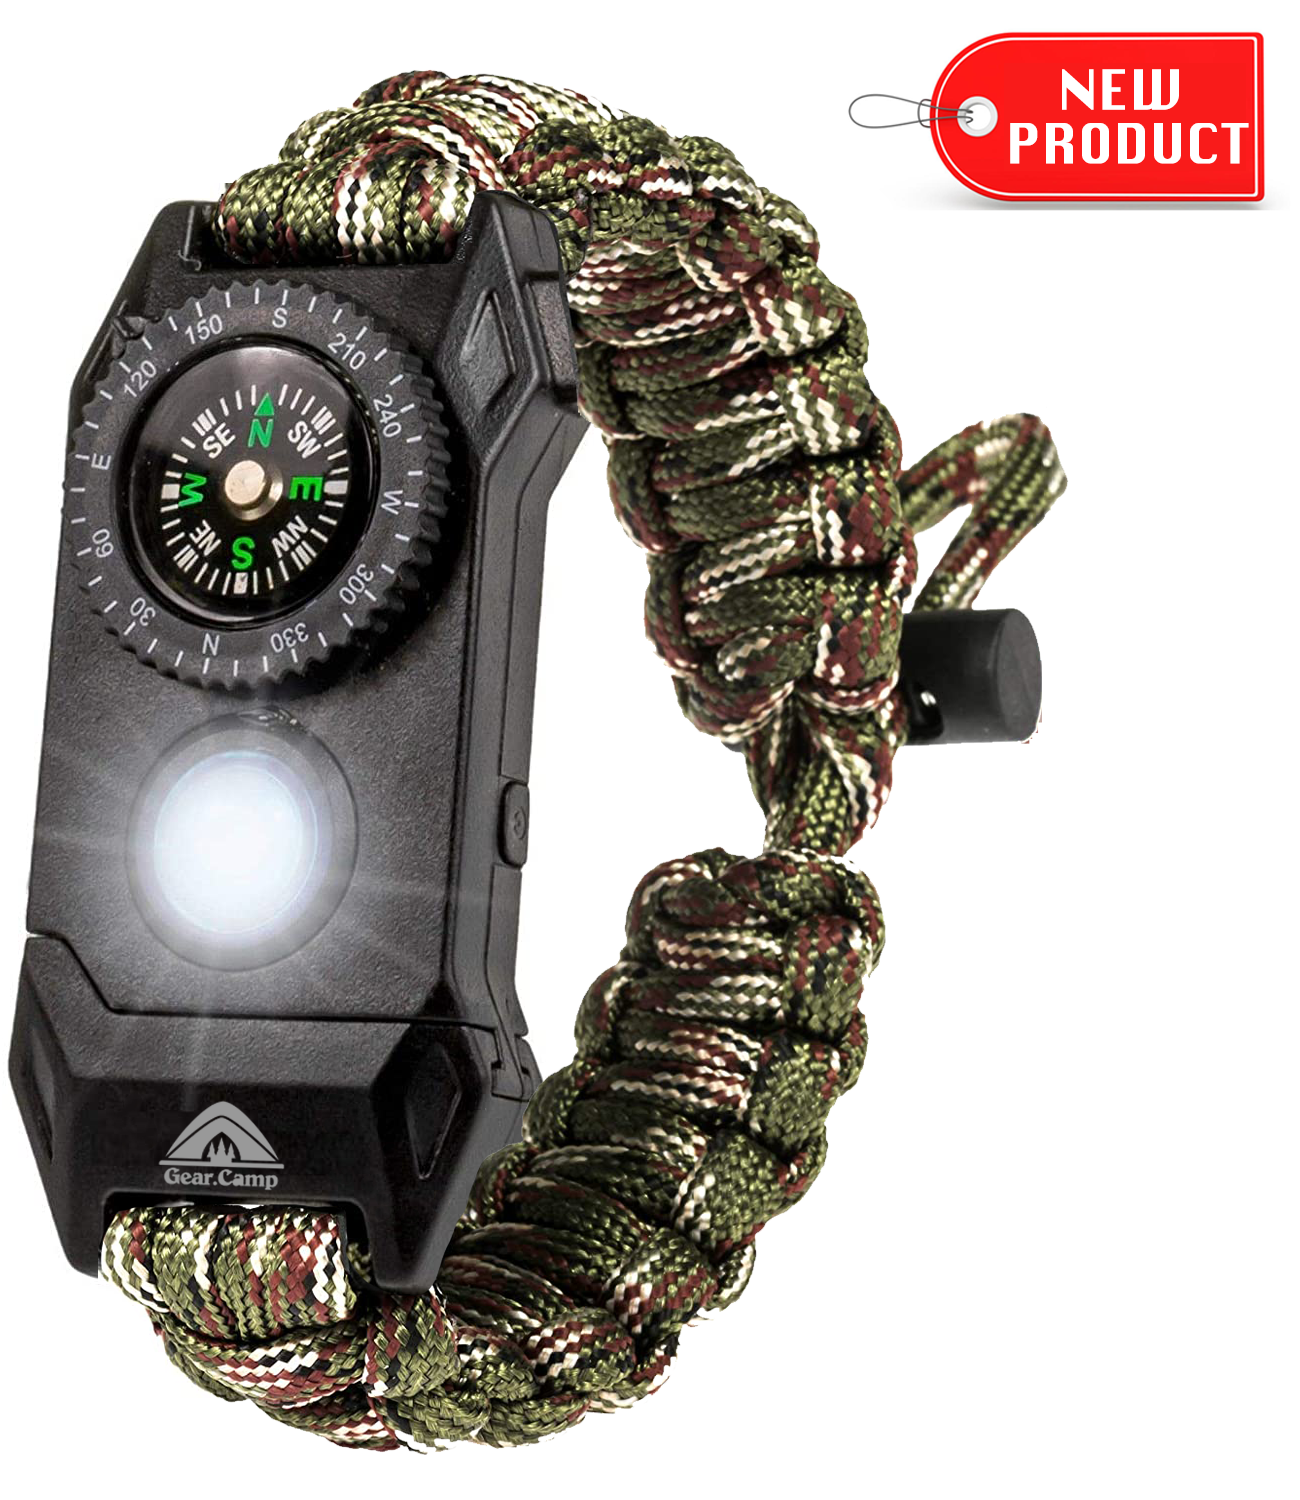 The Outdoorsman - Flashlight Survival Bracelet (Green Camo) with